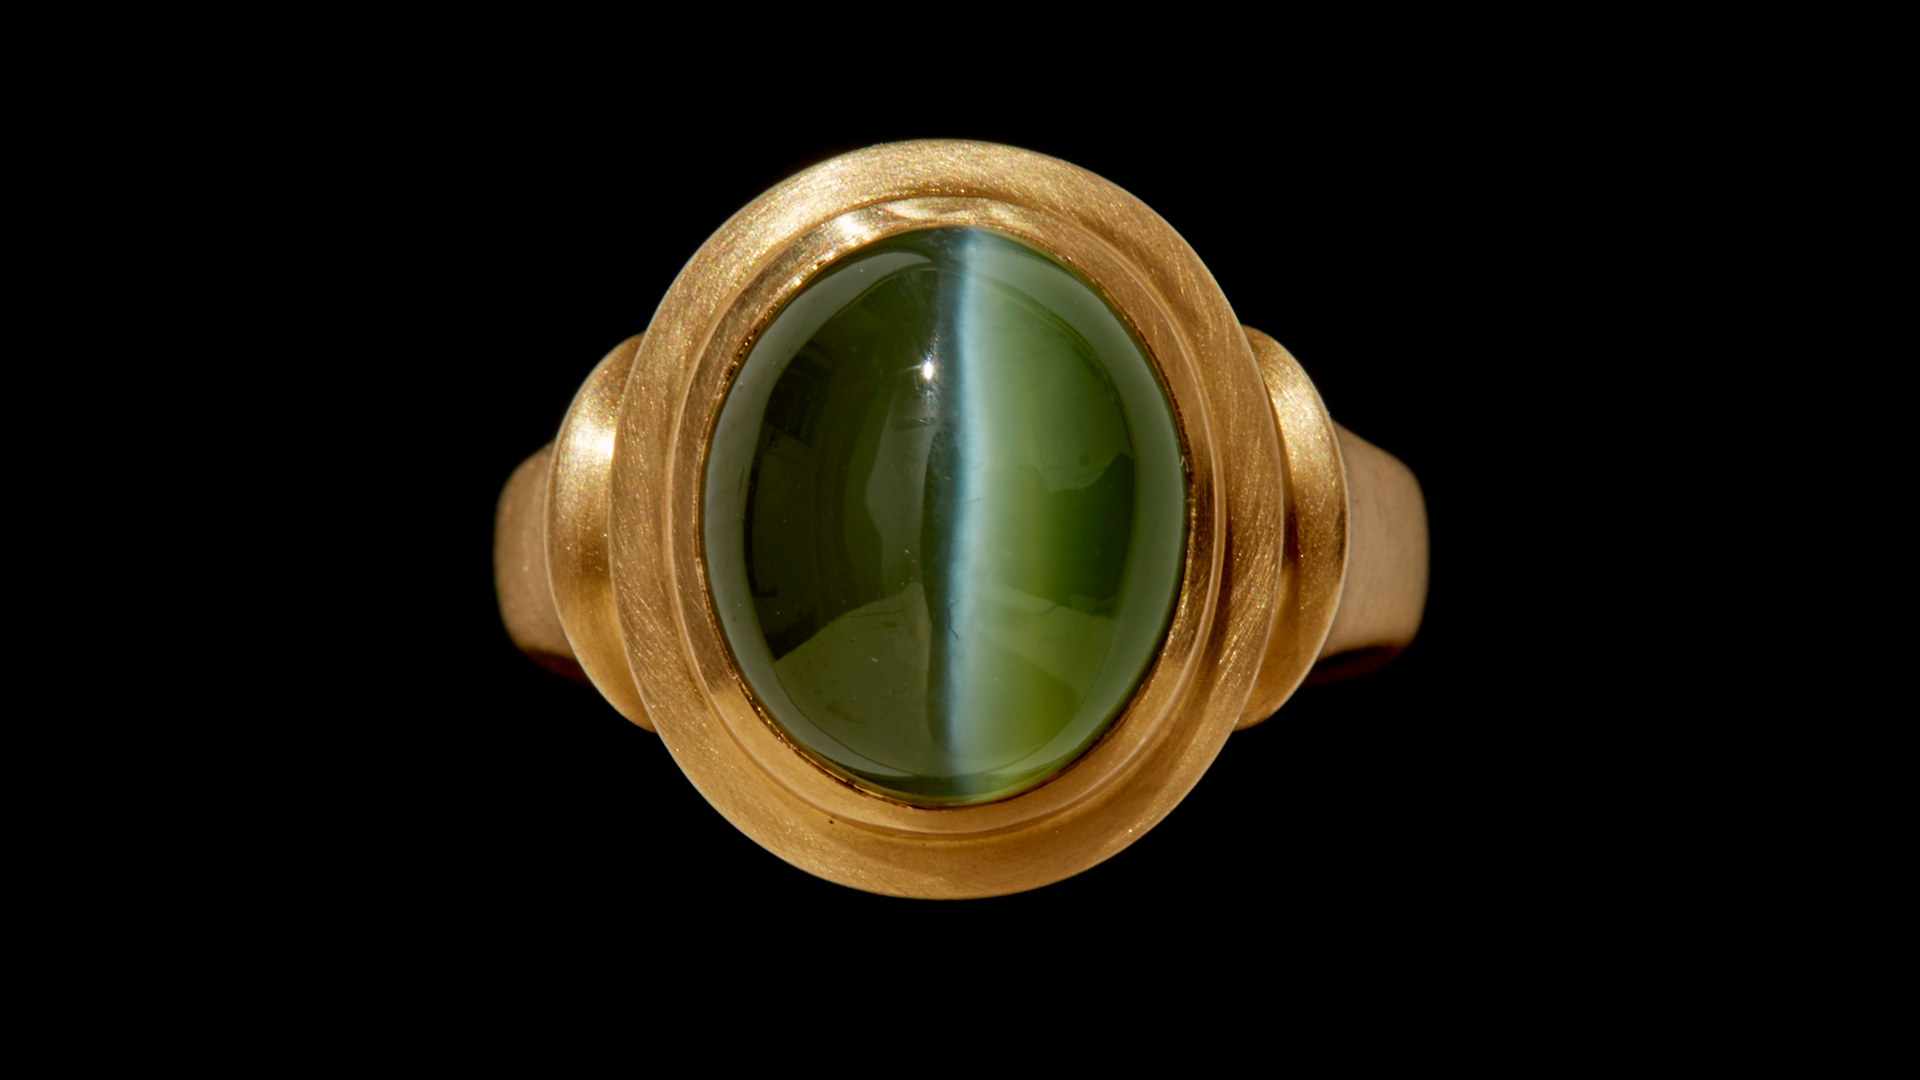 Cat’s eye nephrite jade, diamond and brushed 18-karat gold ring, courtesy Kathryn Bonanno.